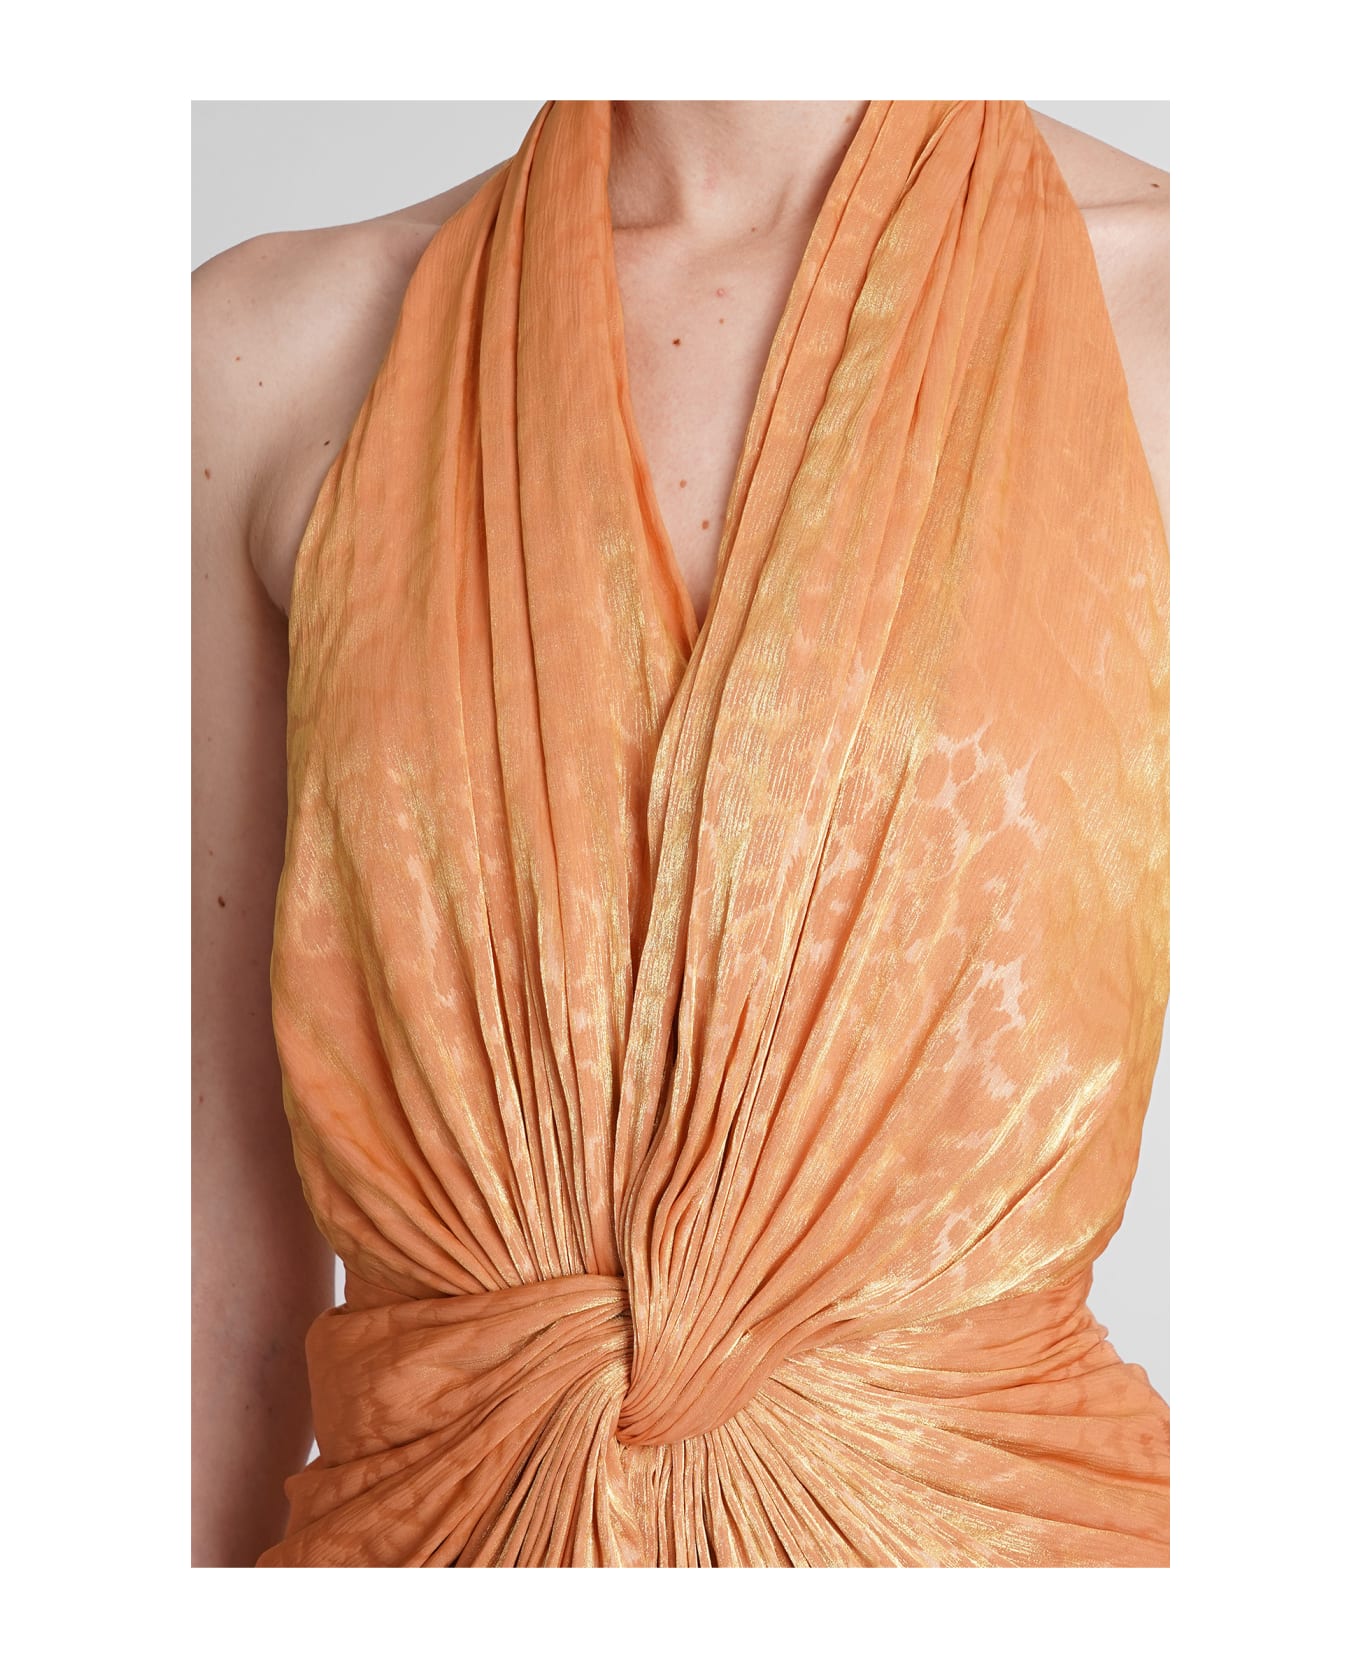 Costarellos Joa Dress In Orange Polyester - orange